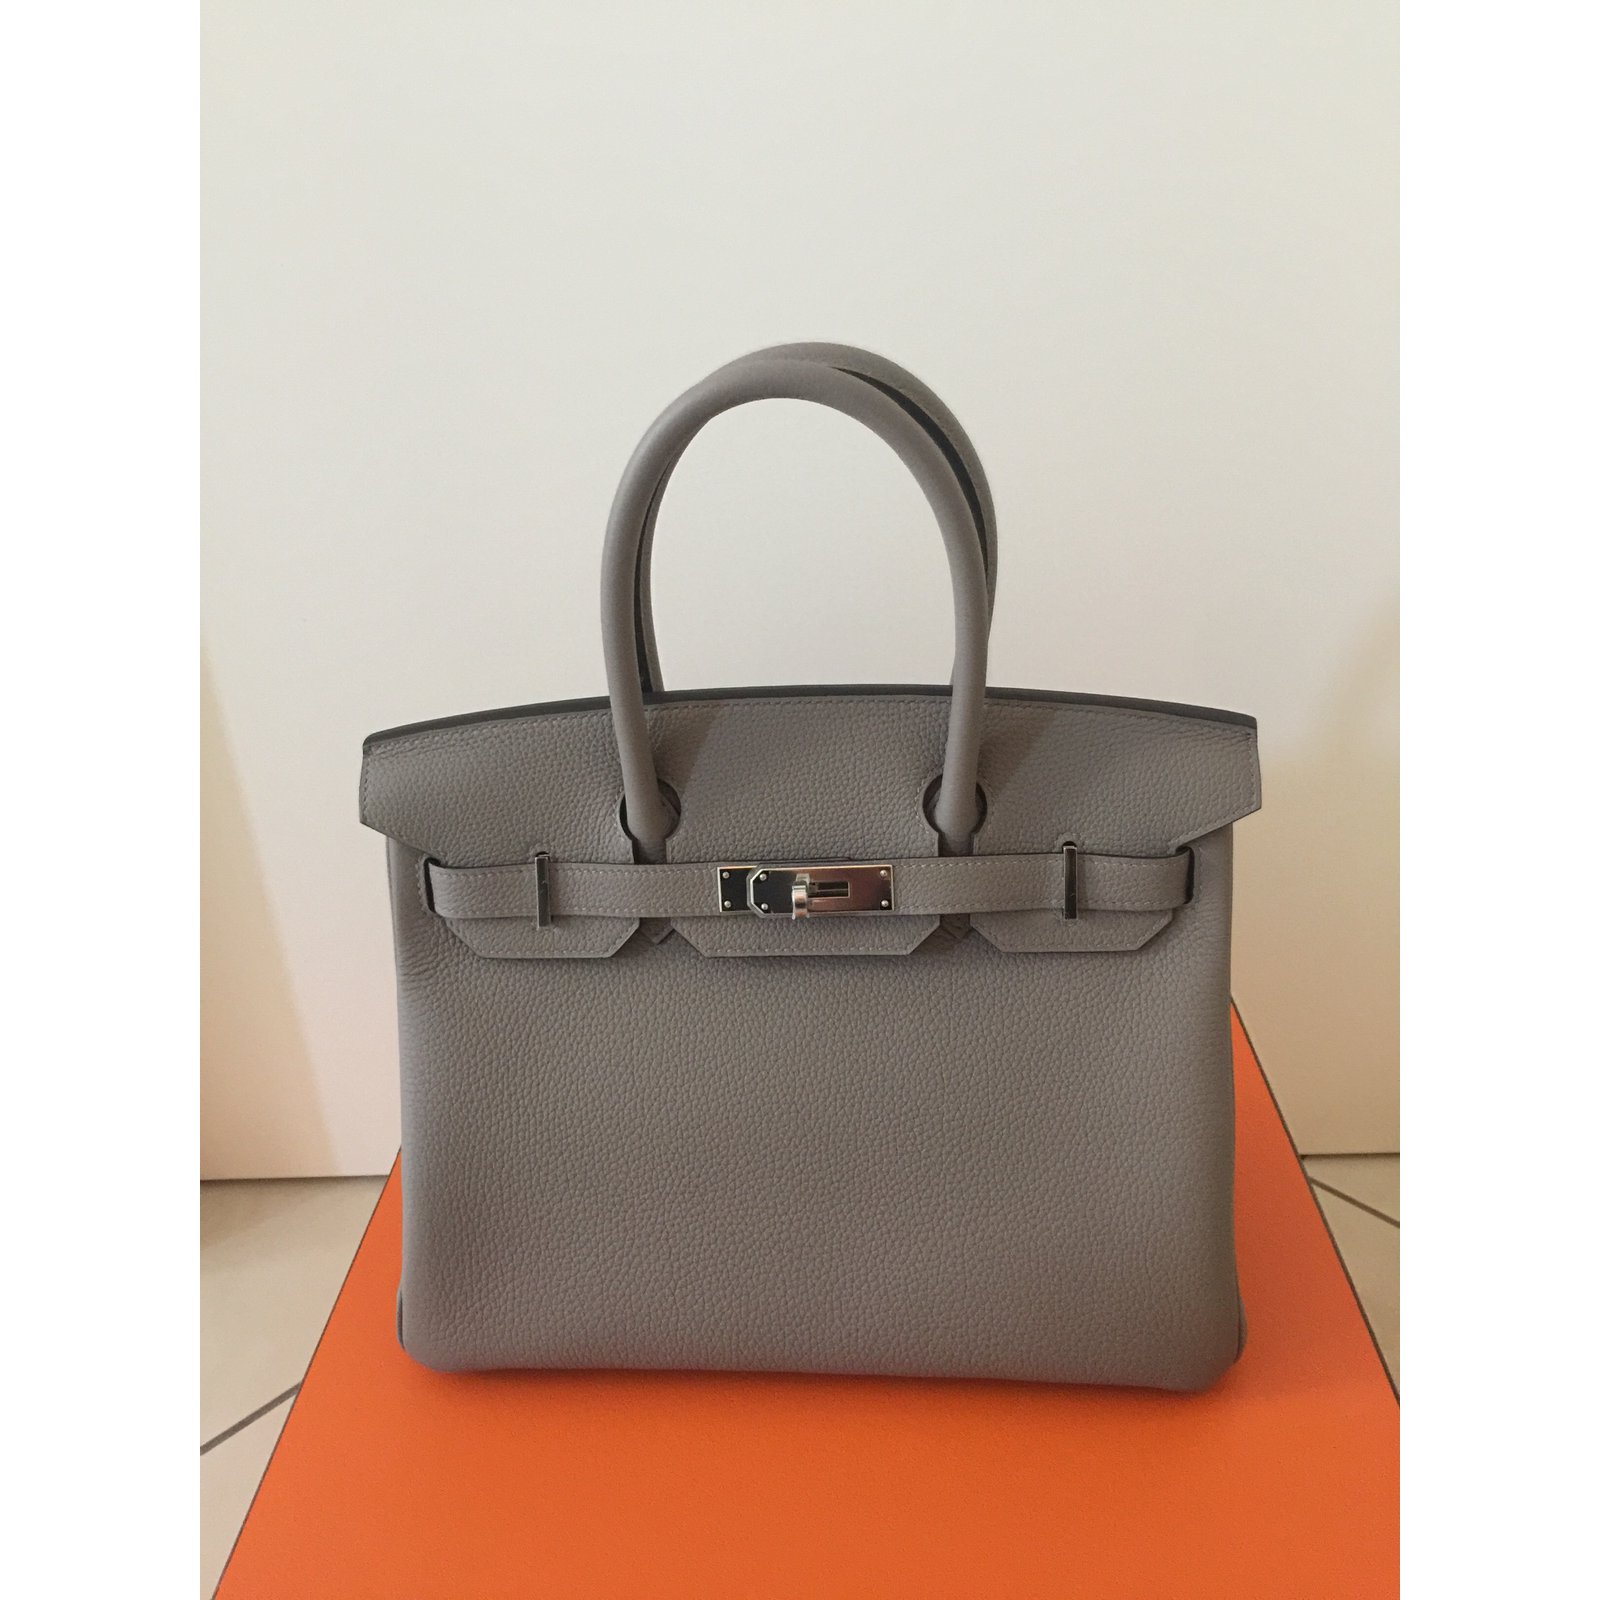 Hermès Birkin 30 cm Handbags Leather 